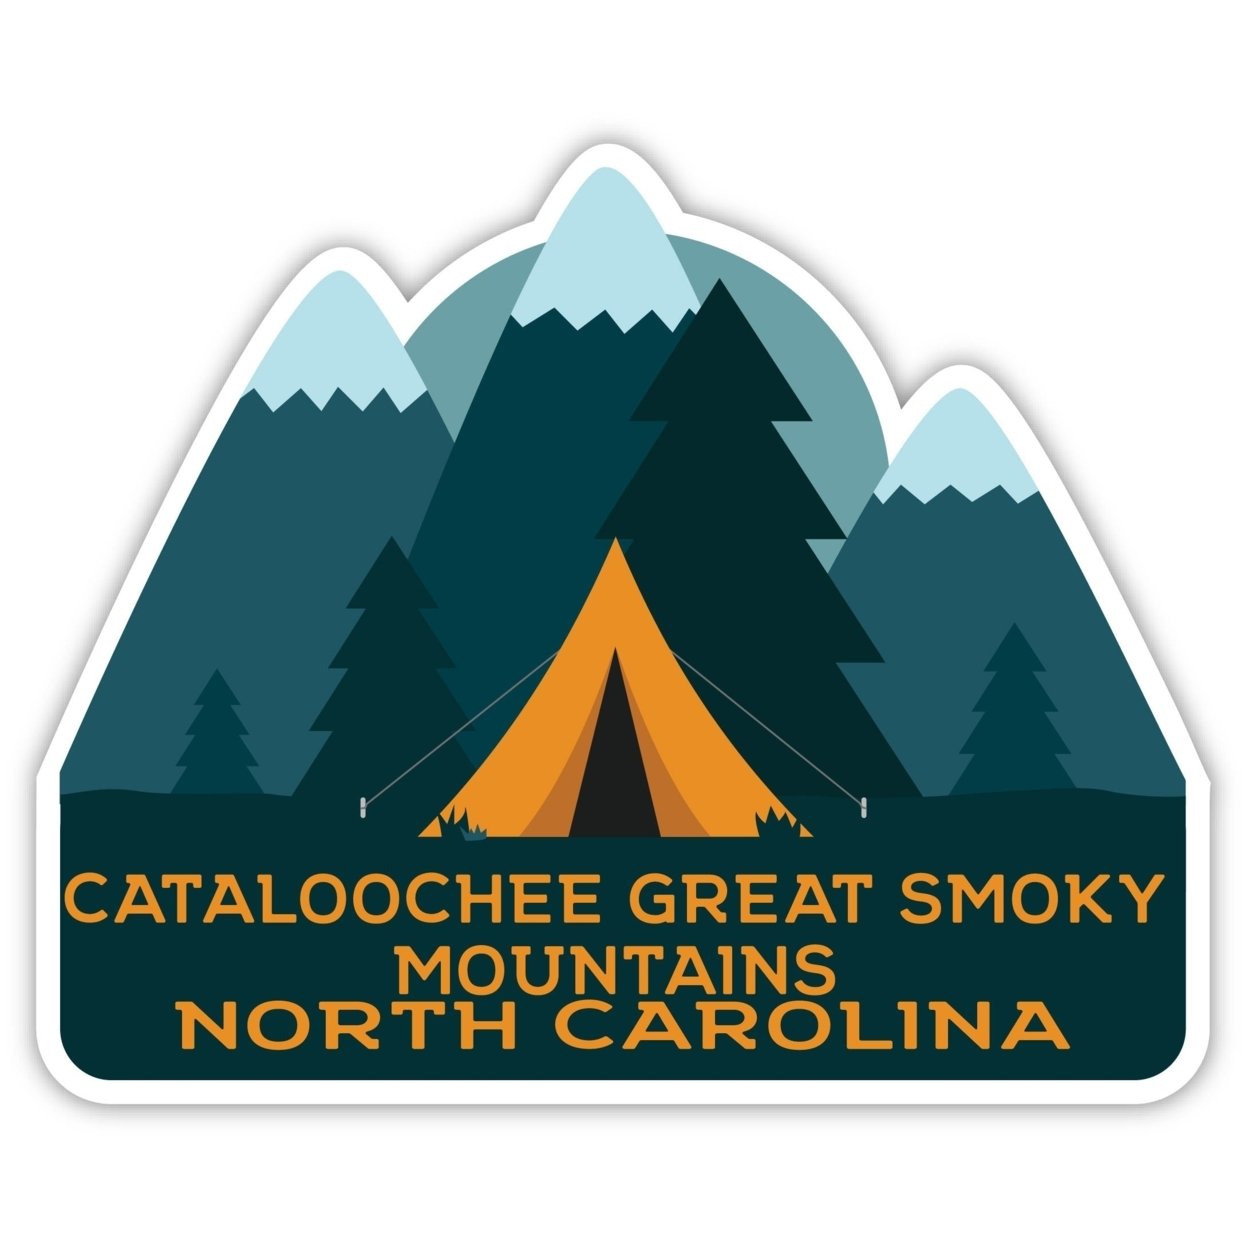 Cataloochee Great Smoky Mountains North Carolina Souvenir Decorative Stickers (Choose Theme And Size) - Single Unit, 2-Inch, Tent